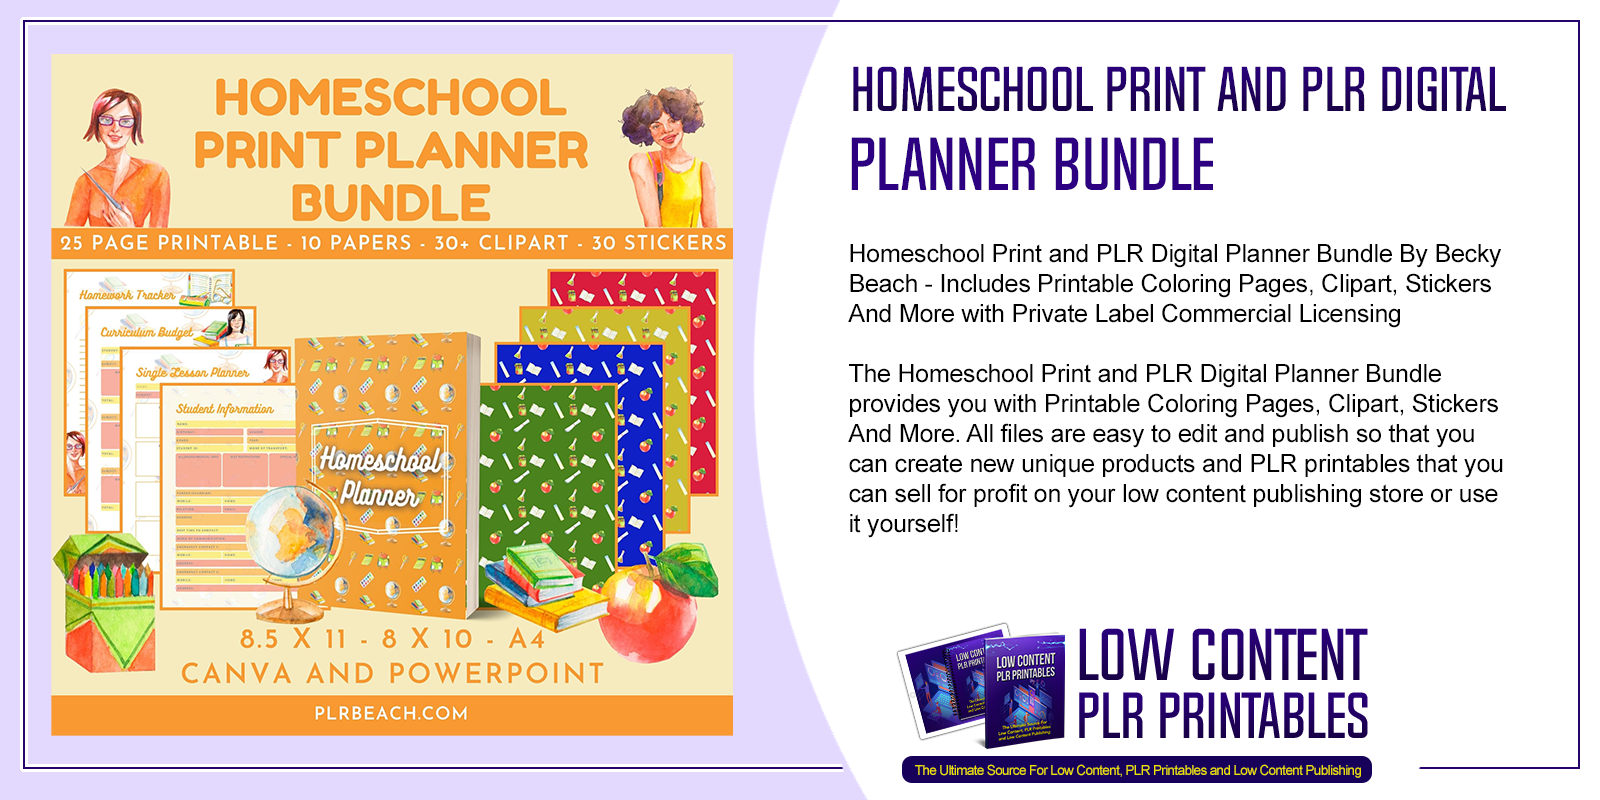 Homeschool Print and PLR Digital Planner Bundle